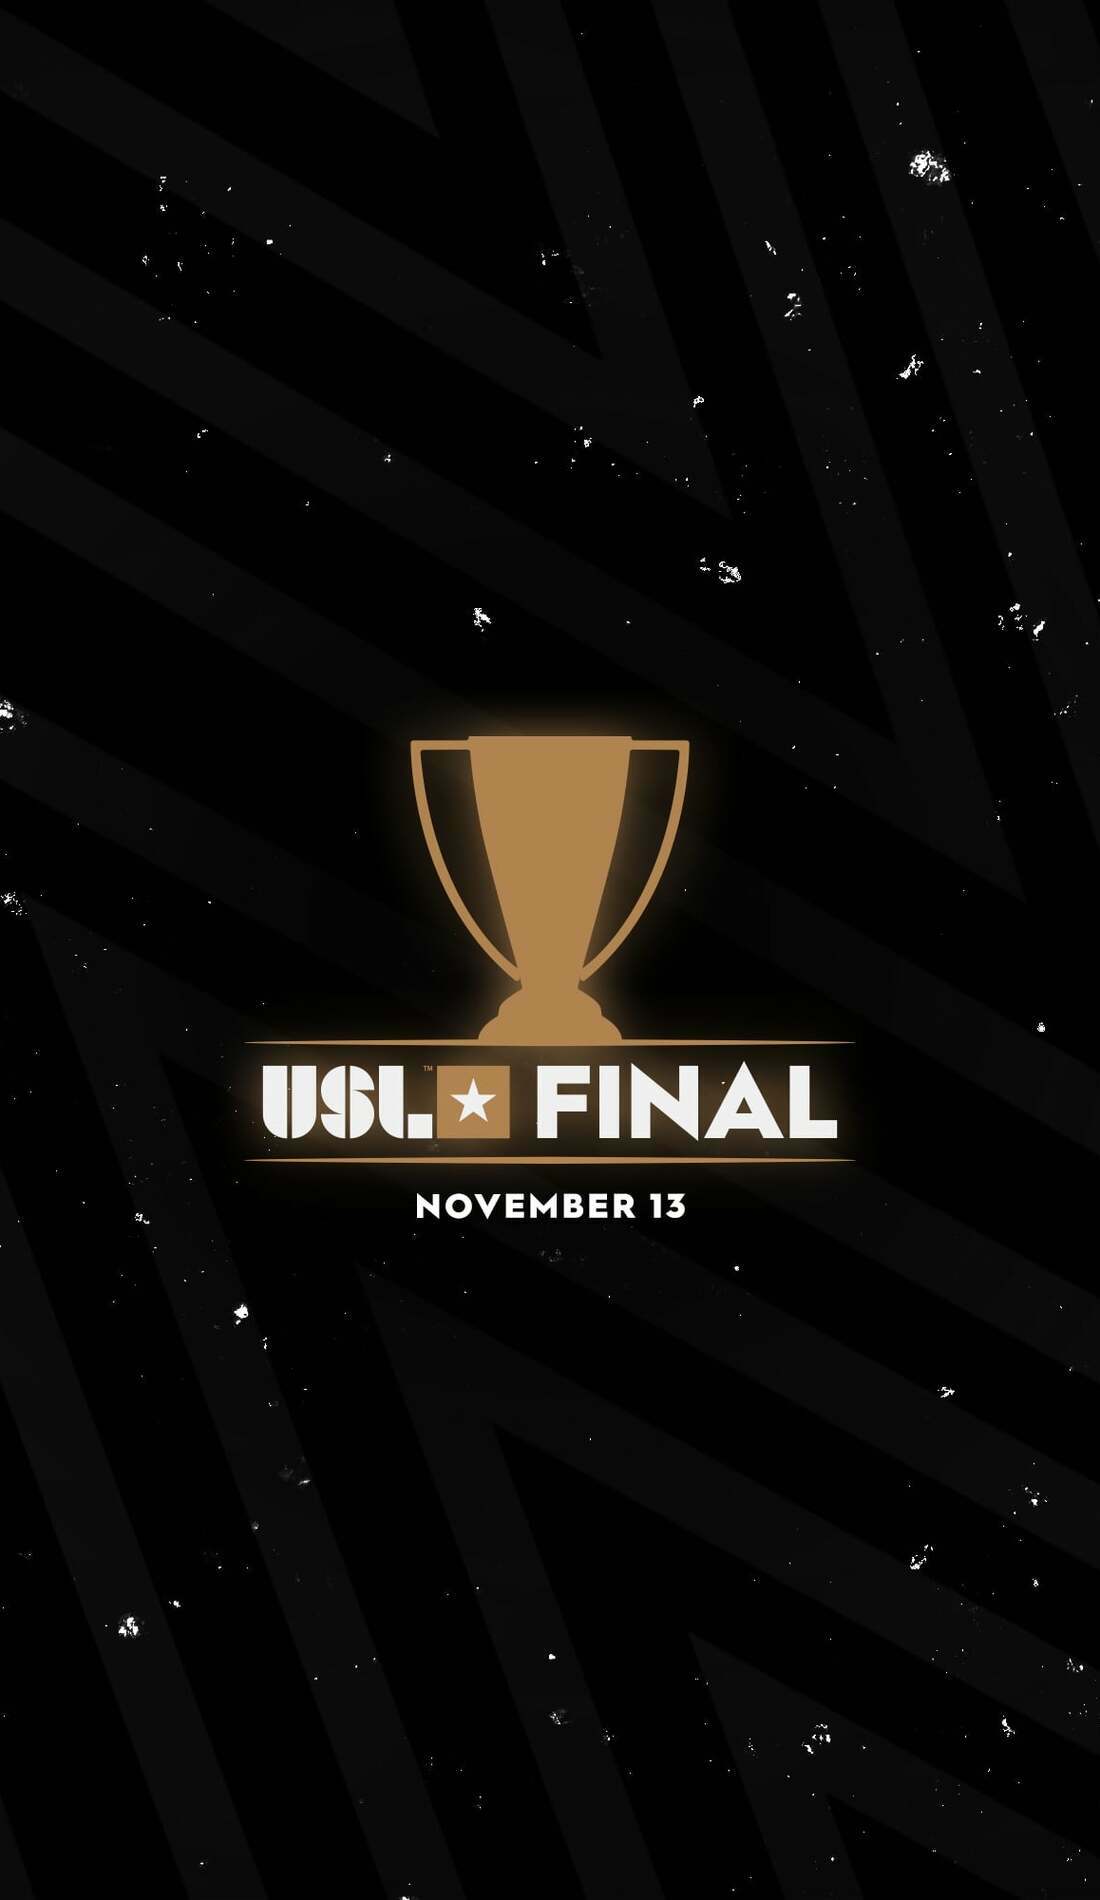 A USL Championship live event